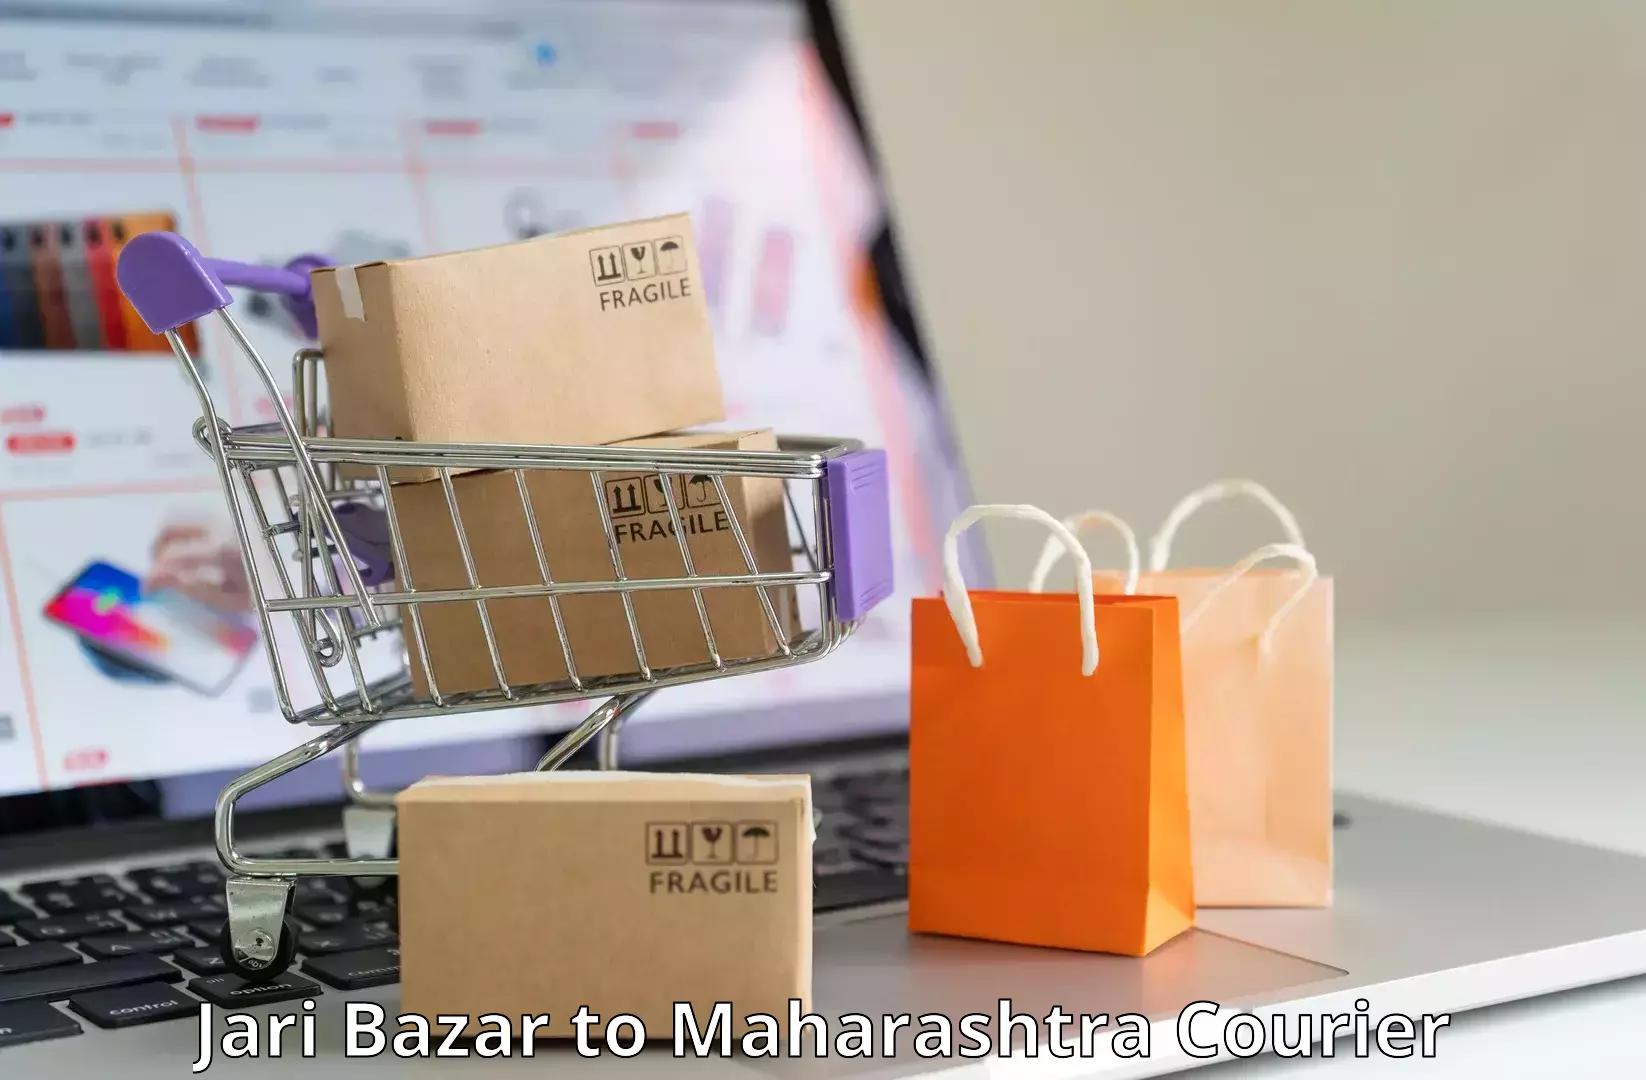 Premium courier services Jari Bazar to Sangamner